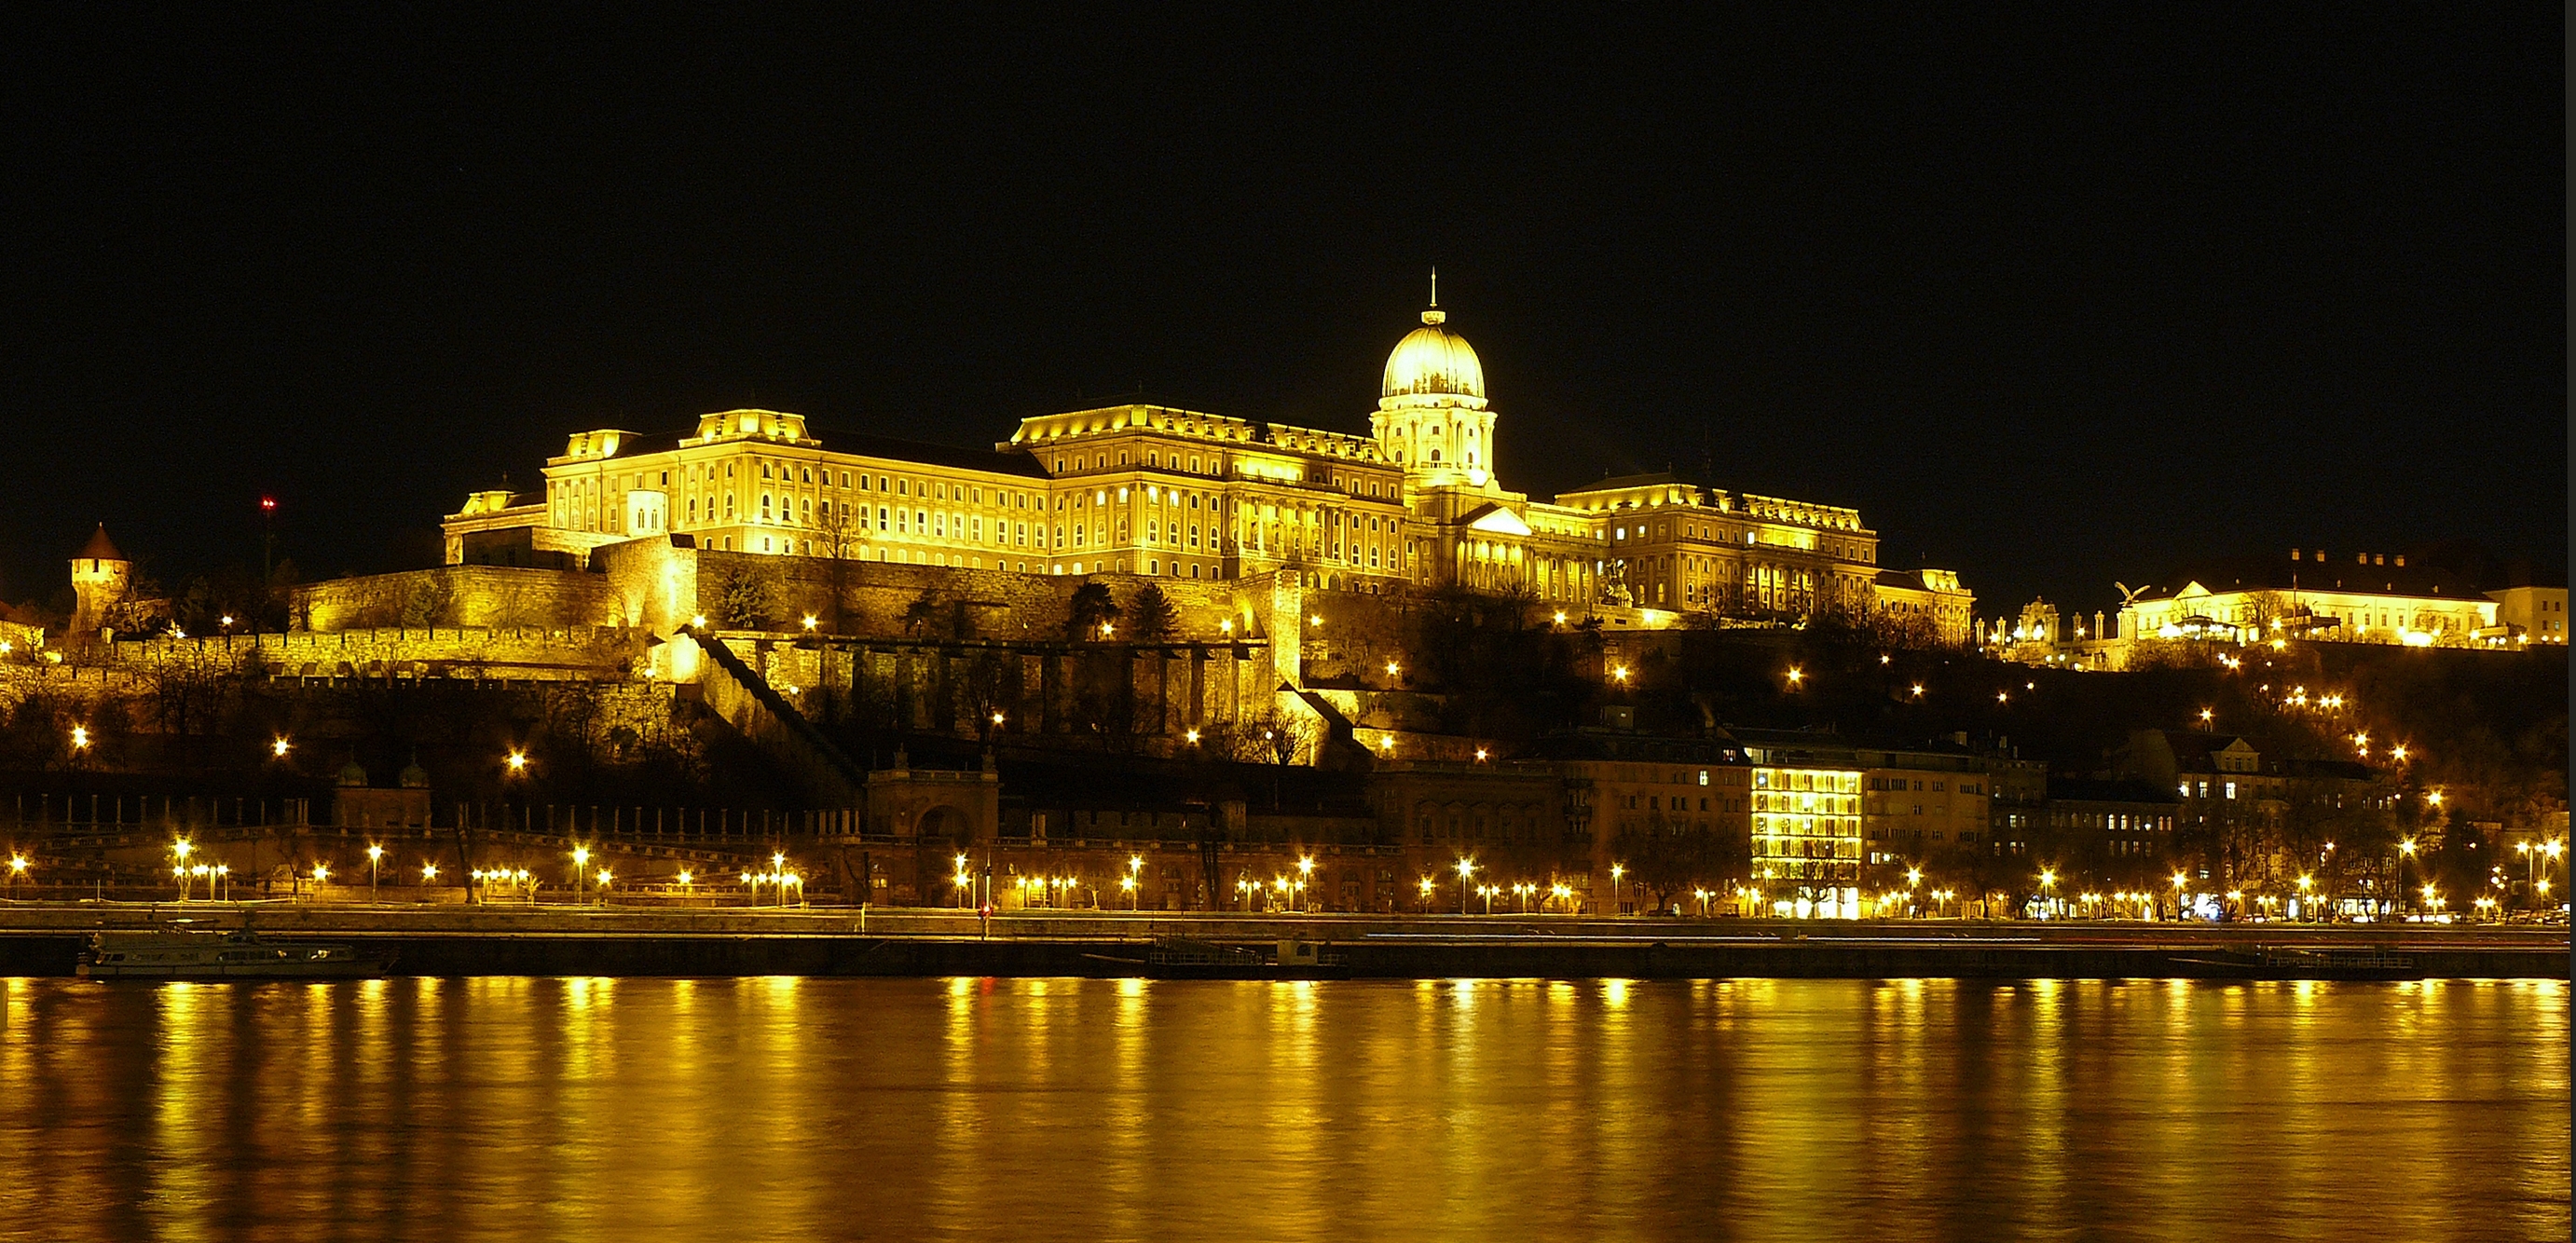 File:Buda Castle by night 2.jpg - Wikimedia Commons